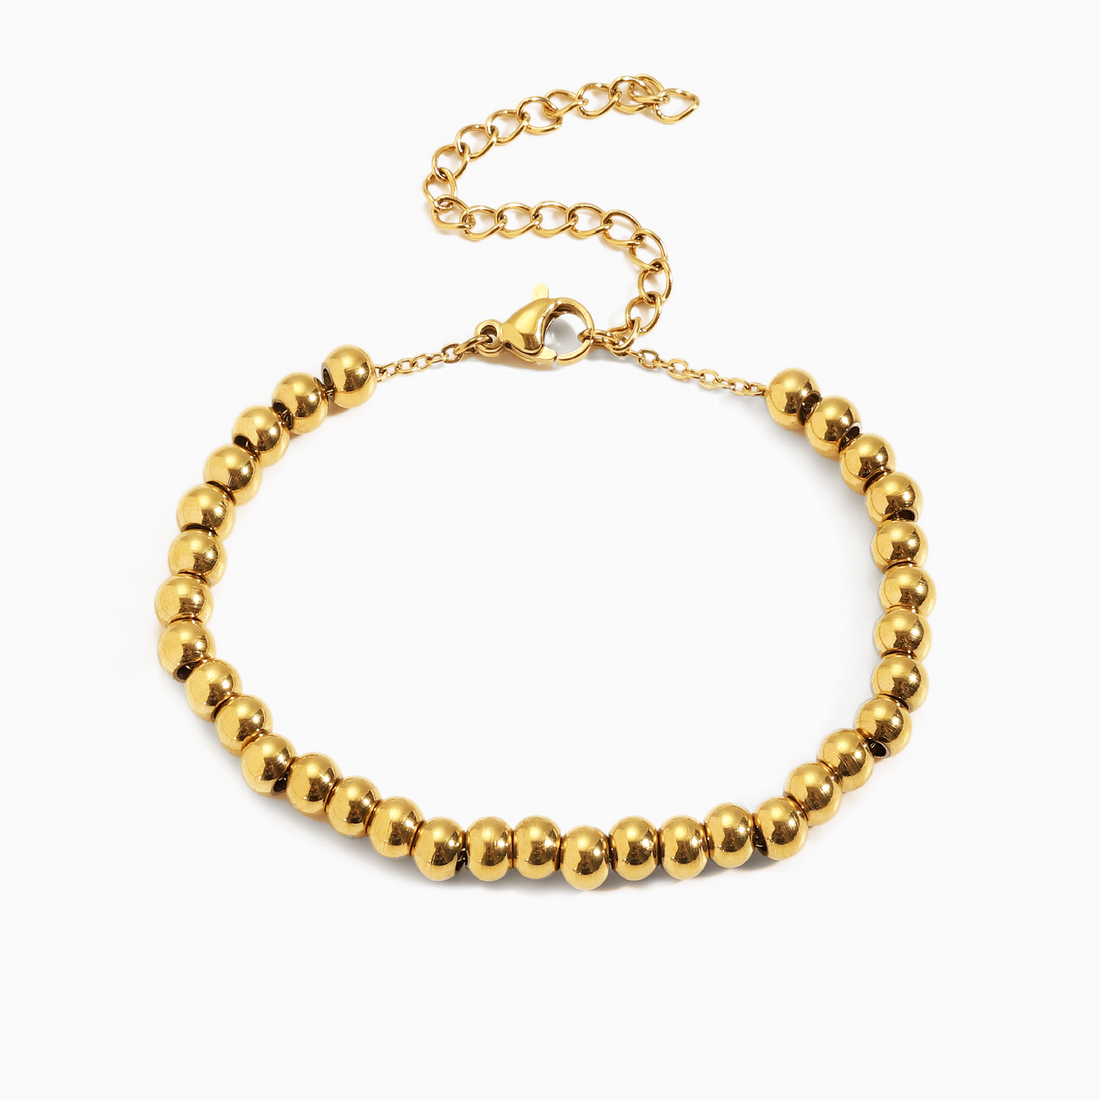 Tasbih Beads Bracelet + Free Gift Pouch